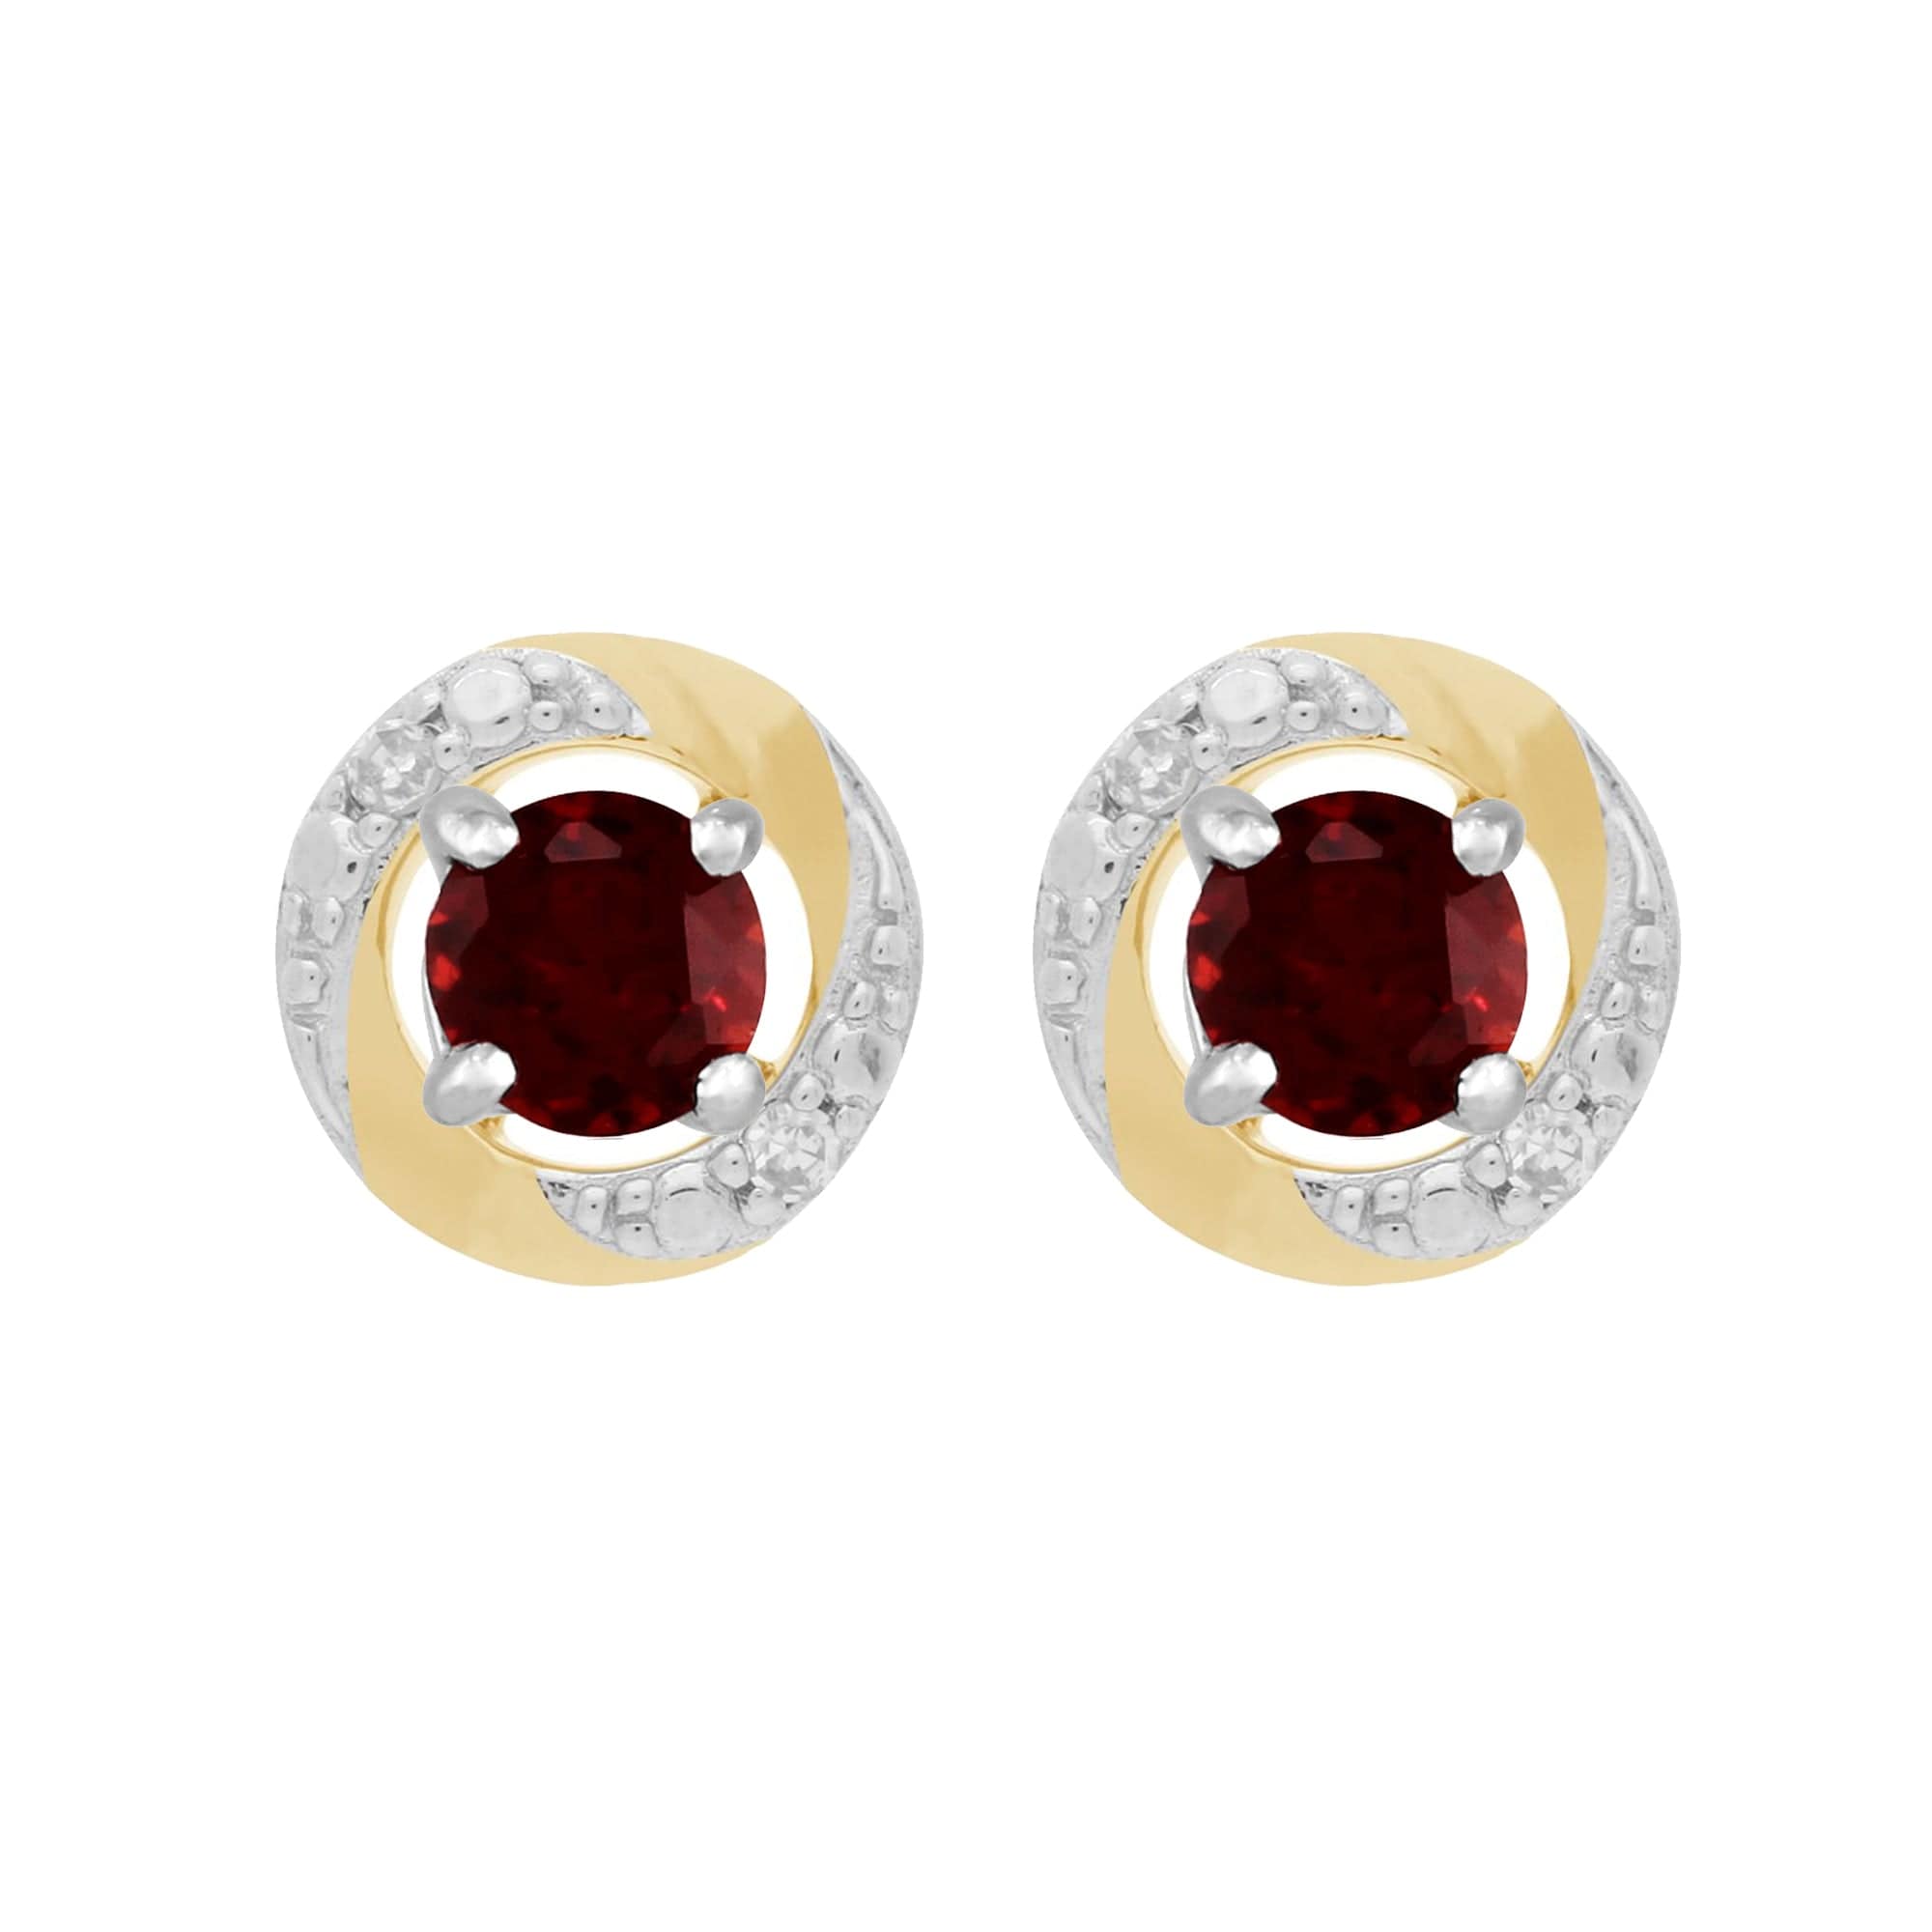 117E0031109-191E0374019 9ct White Gold Garnet Stud Earrings with Detachable Diamond Halo Ear Jacket in 9ct Yellow Gold 1